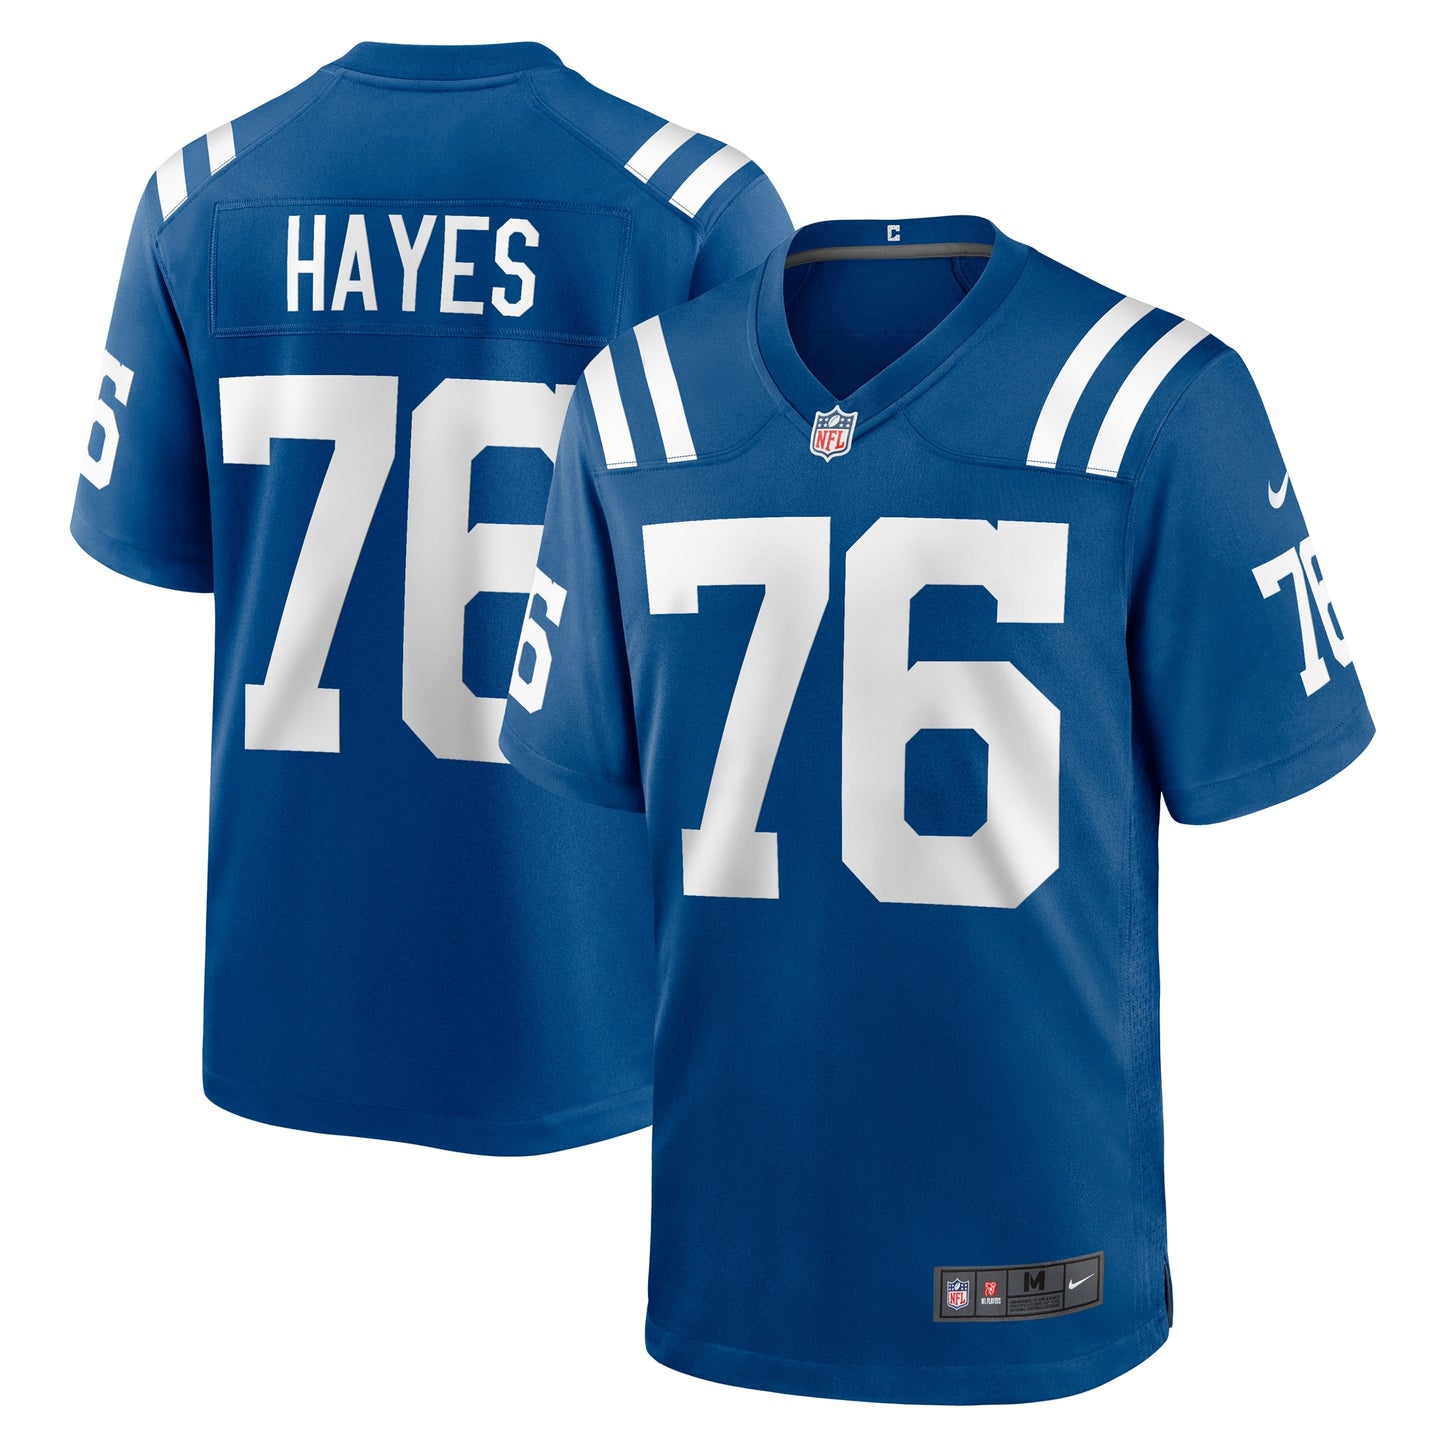 Ryan Hayes Indianapolis Colts Nike Team Game Jersey - Royal